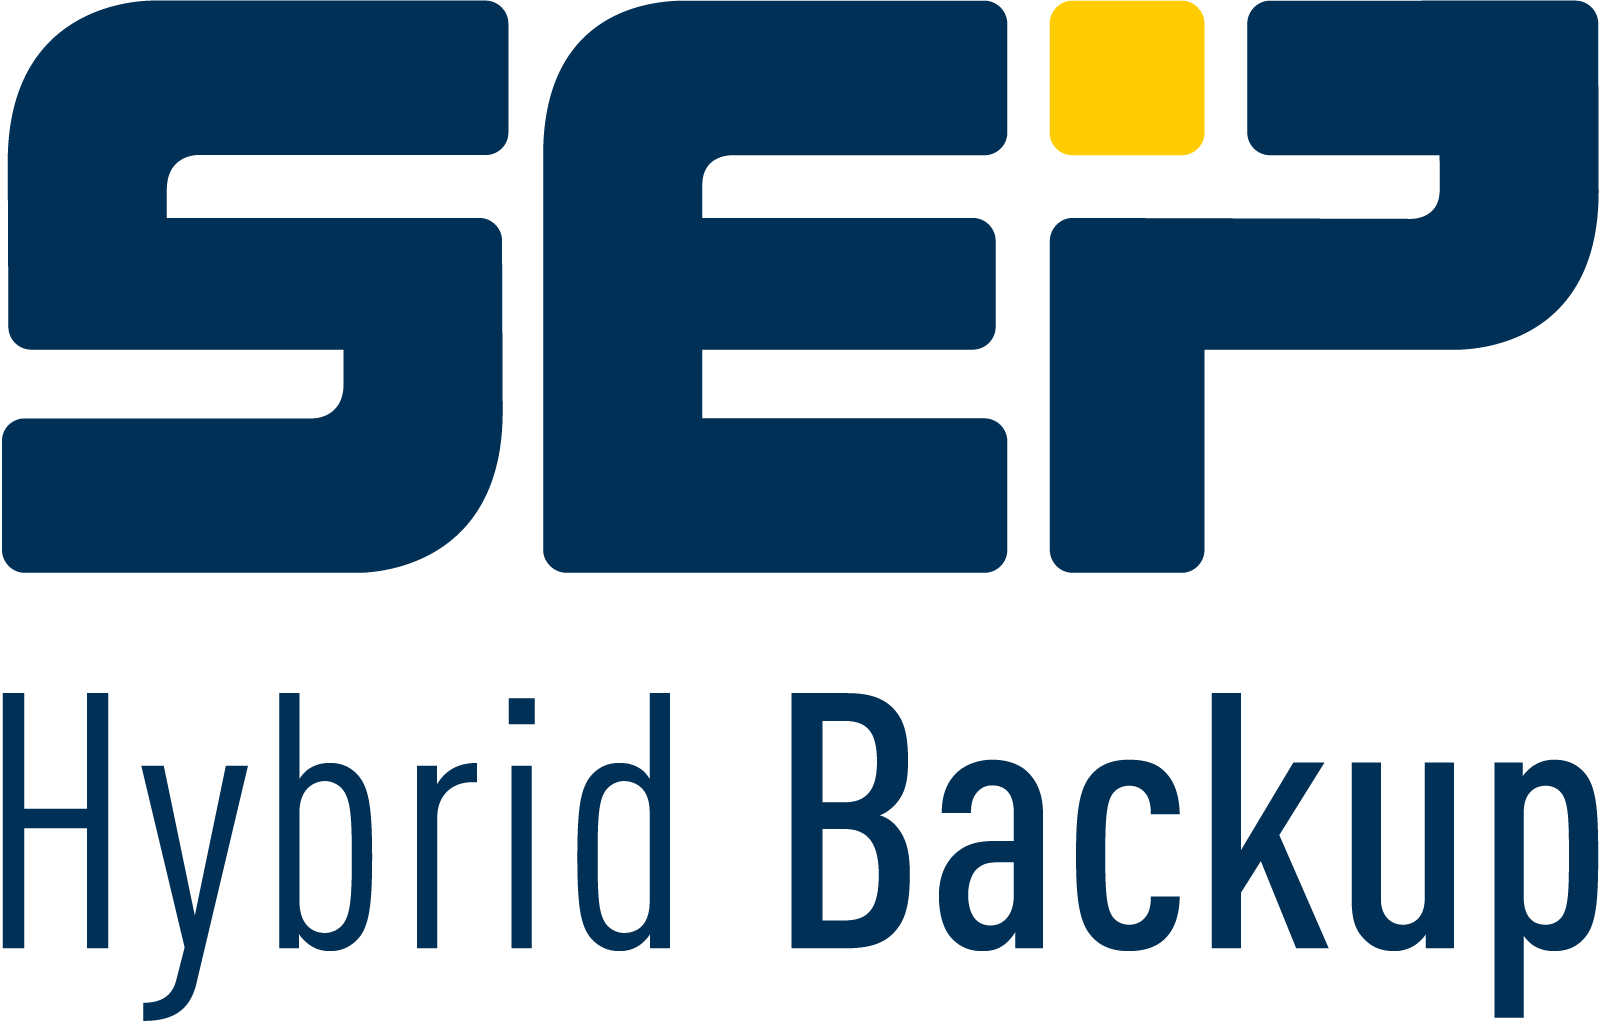 SEP HybridBackup-sub cmyk